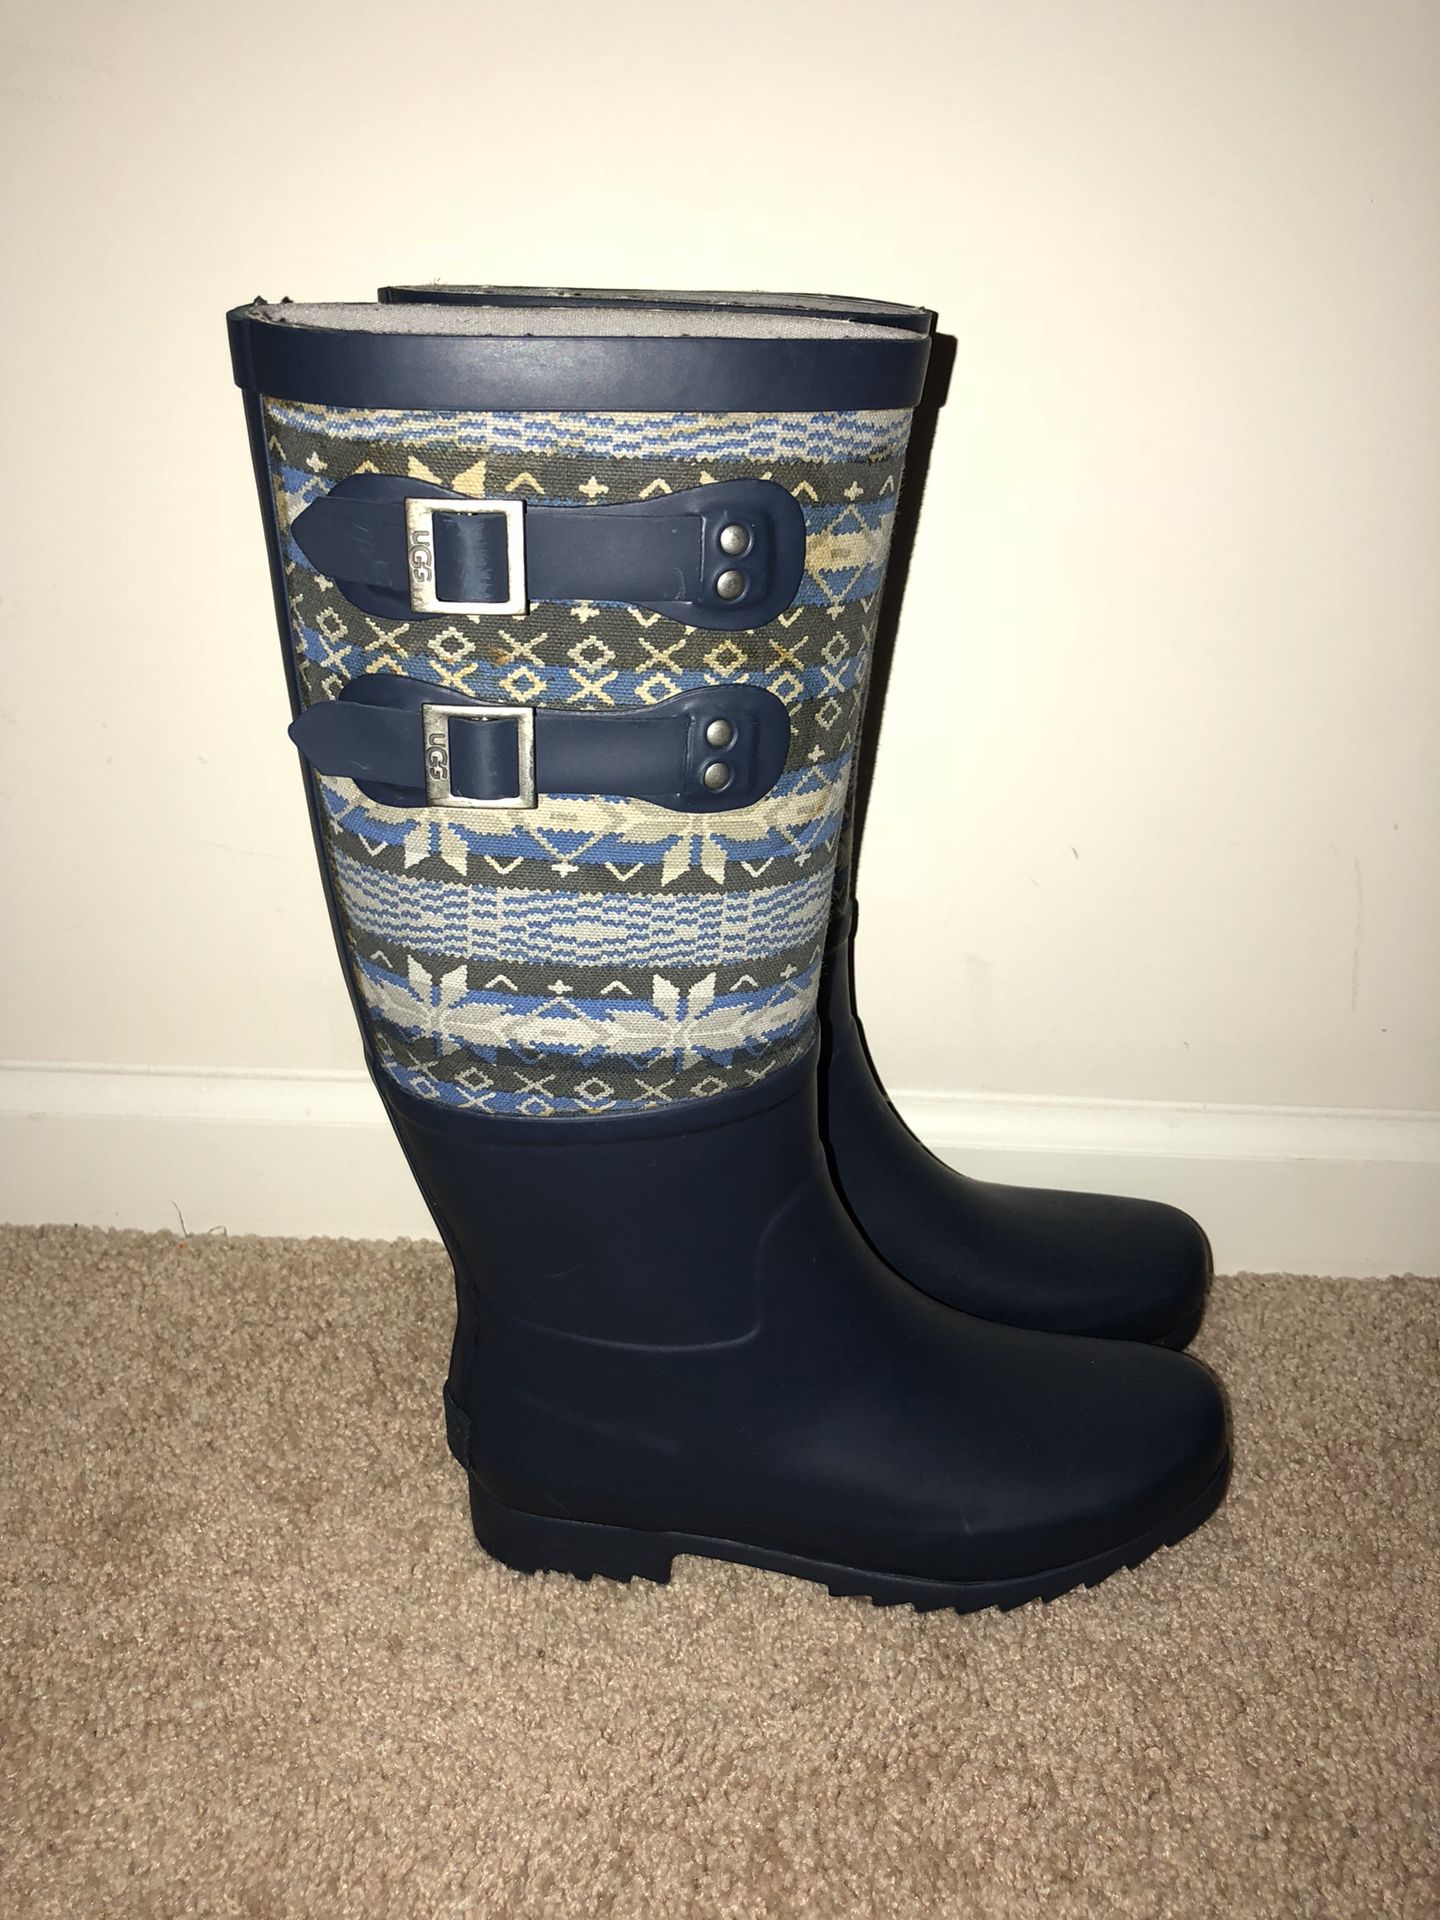 Ugg high top rain boots